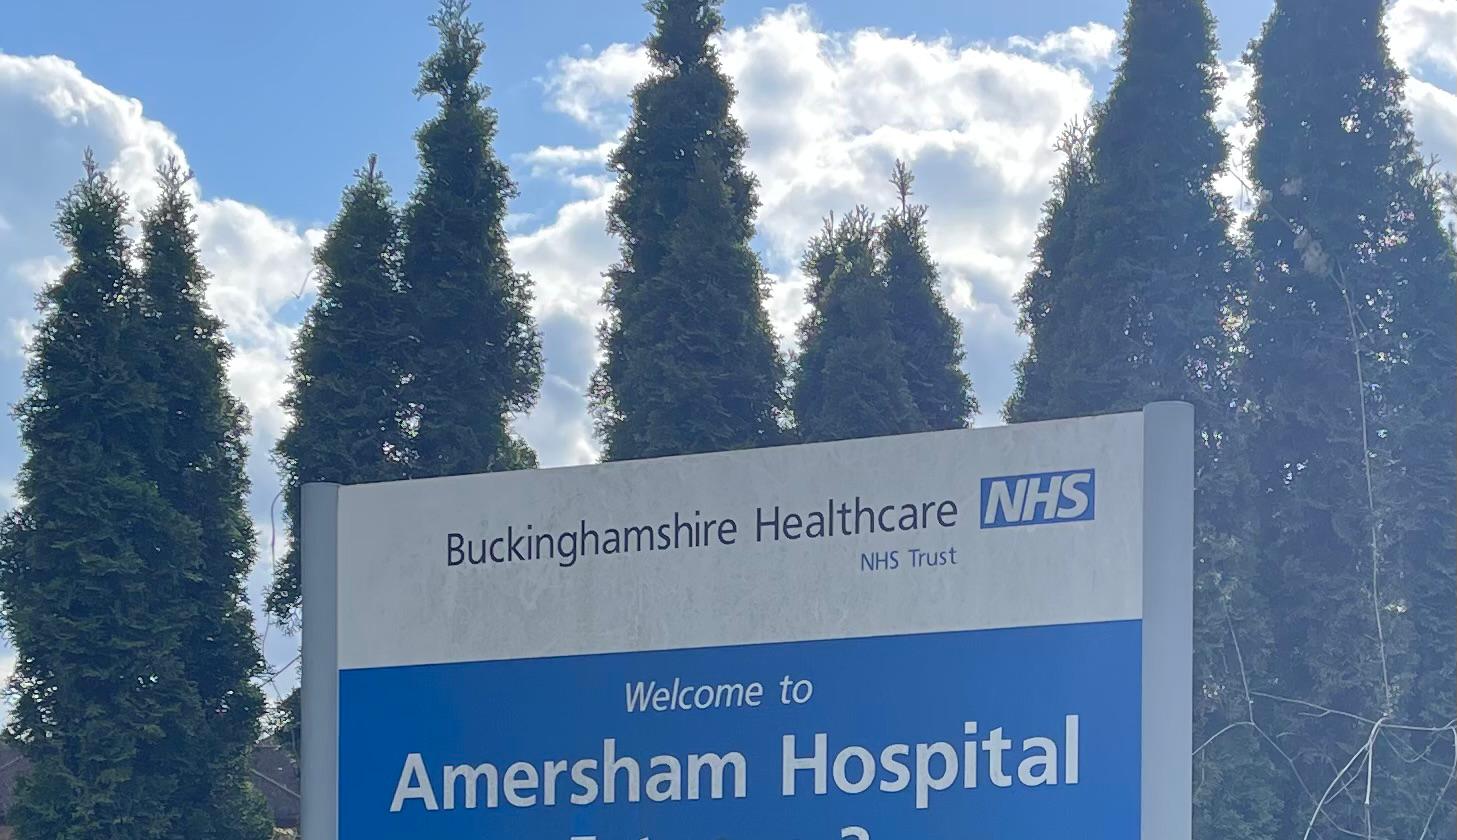 Amersham Hospital welcome sign